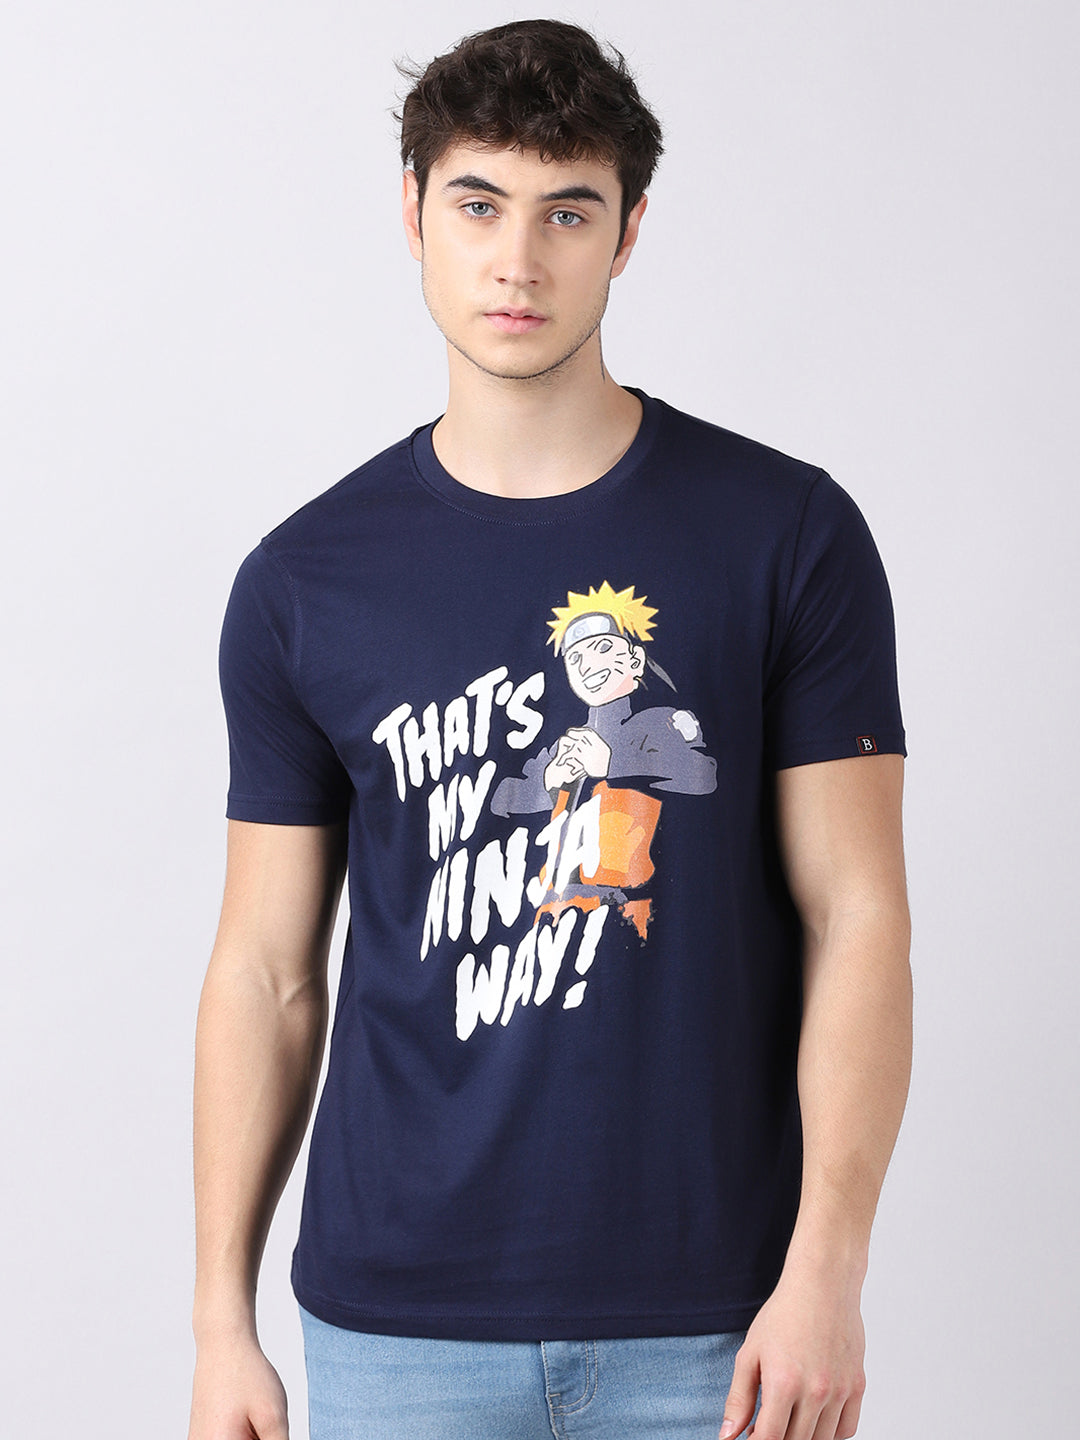 Naruto Ninja Way Epic Design Anime T-Shirt Graphic T-Shirts Bushirt   